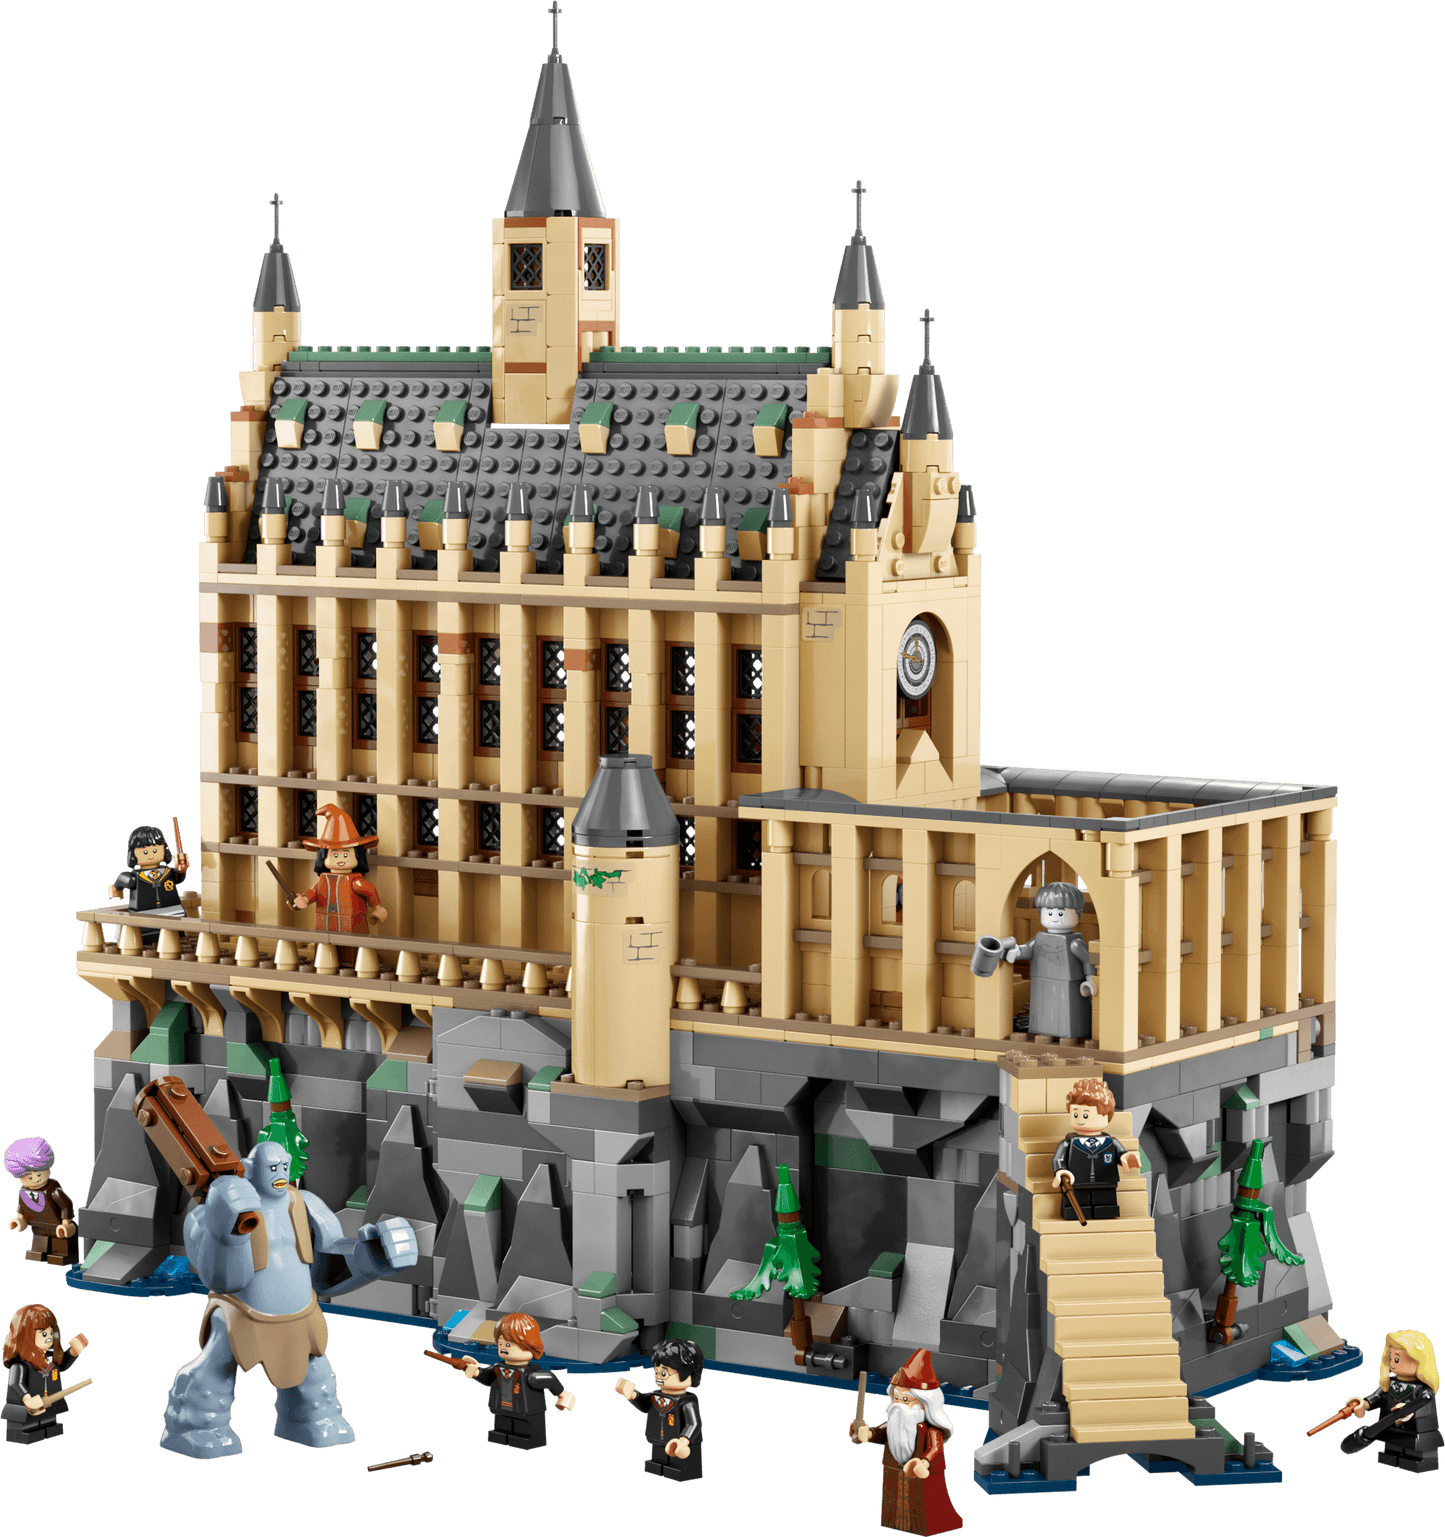 LEGO Zweinsteins Grote Zaal 76435 Harry Potter (Pre-Order: verwacht juni) LEGO HARRY POTTER @ 2TTOYS LEGO €. 168.99